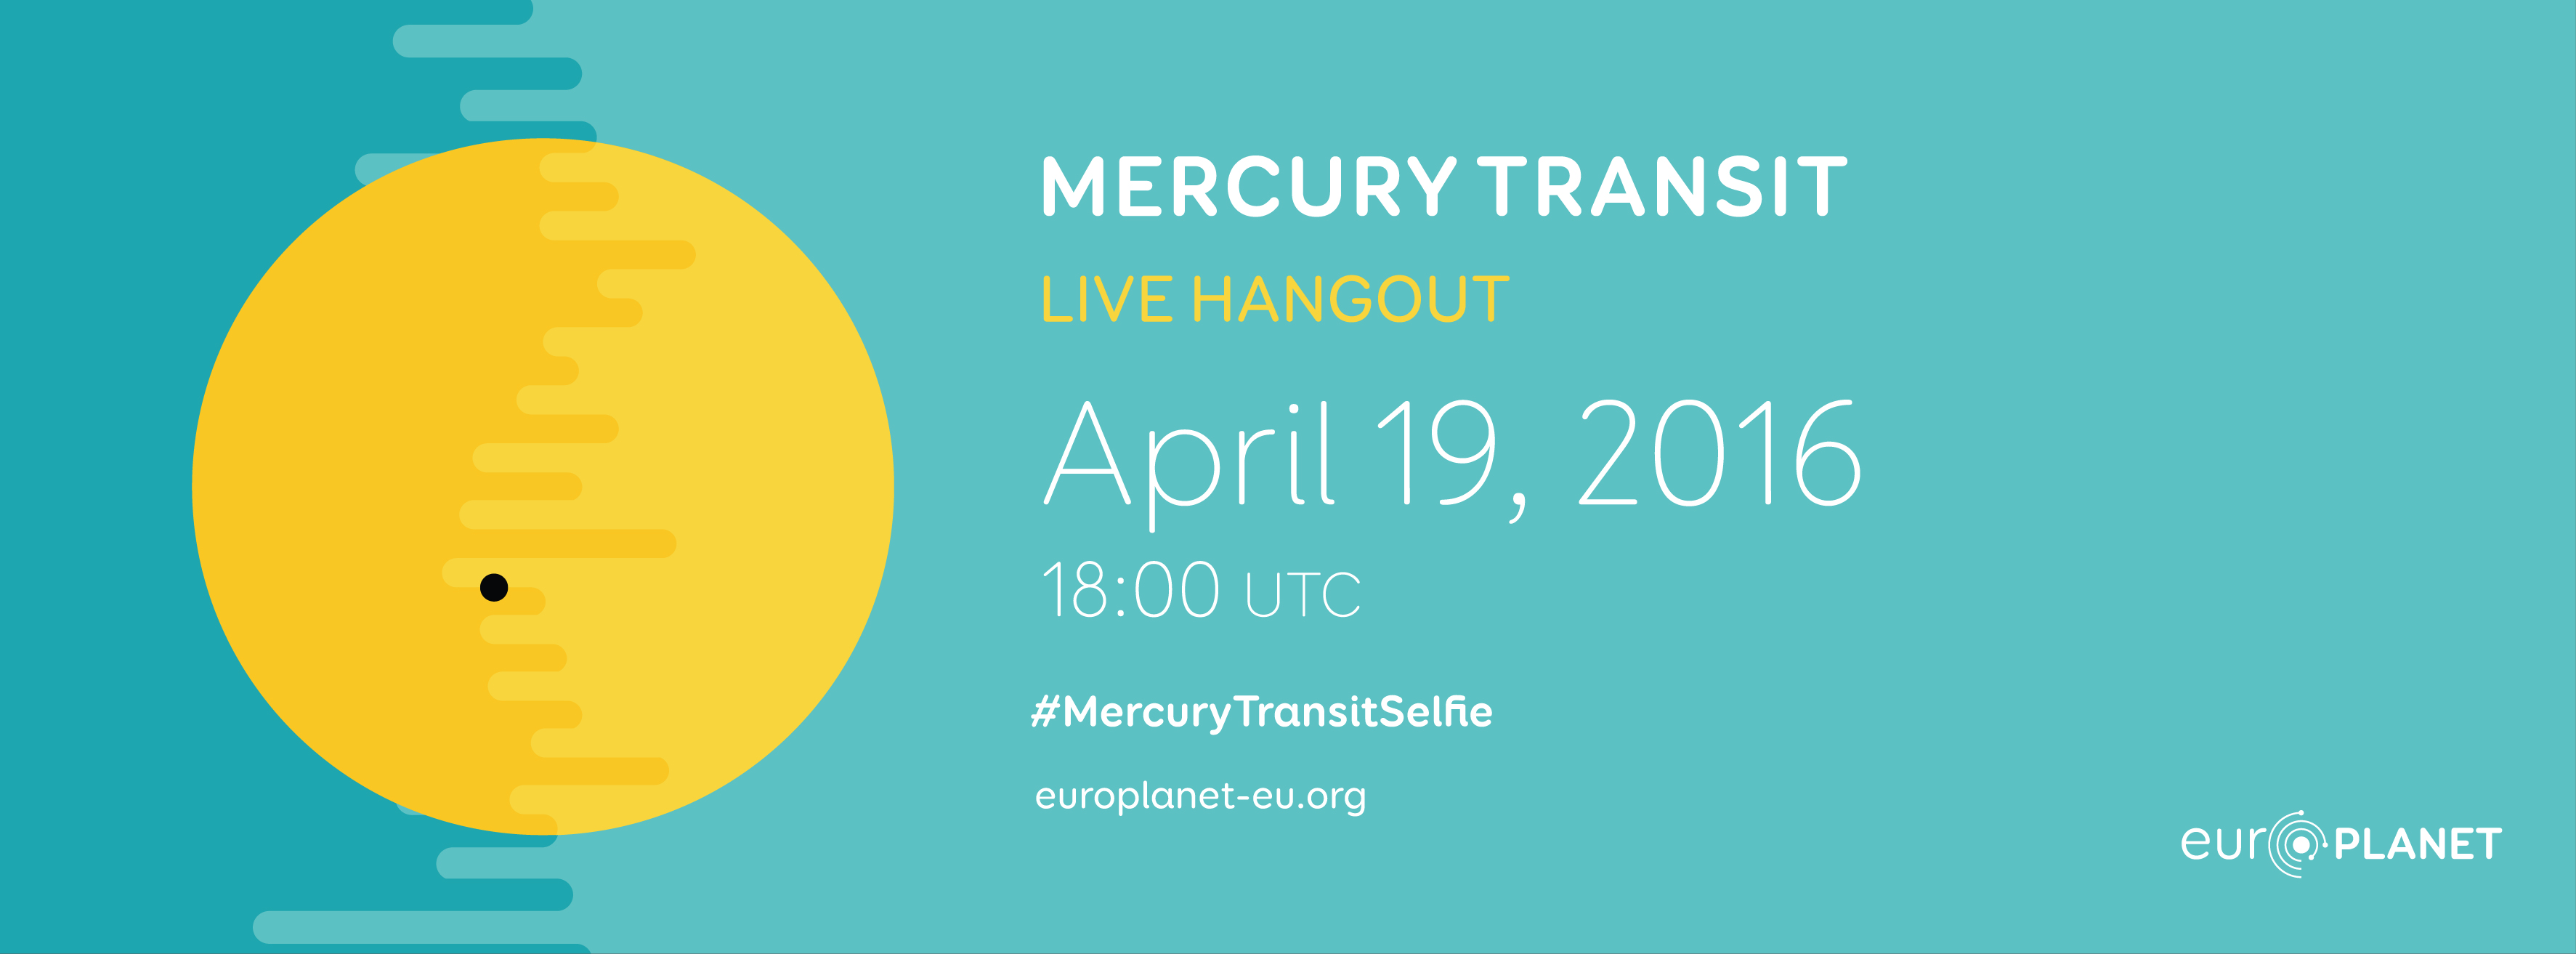 Mercury hangout 19 april